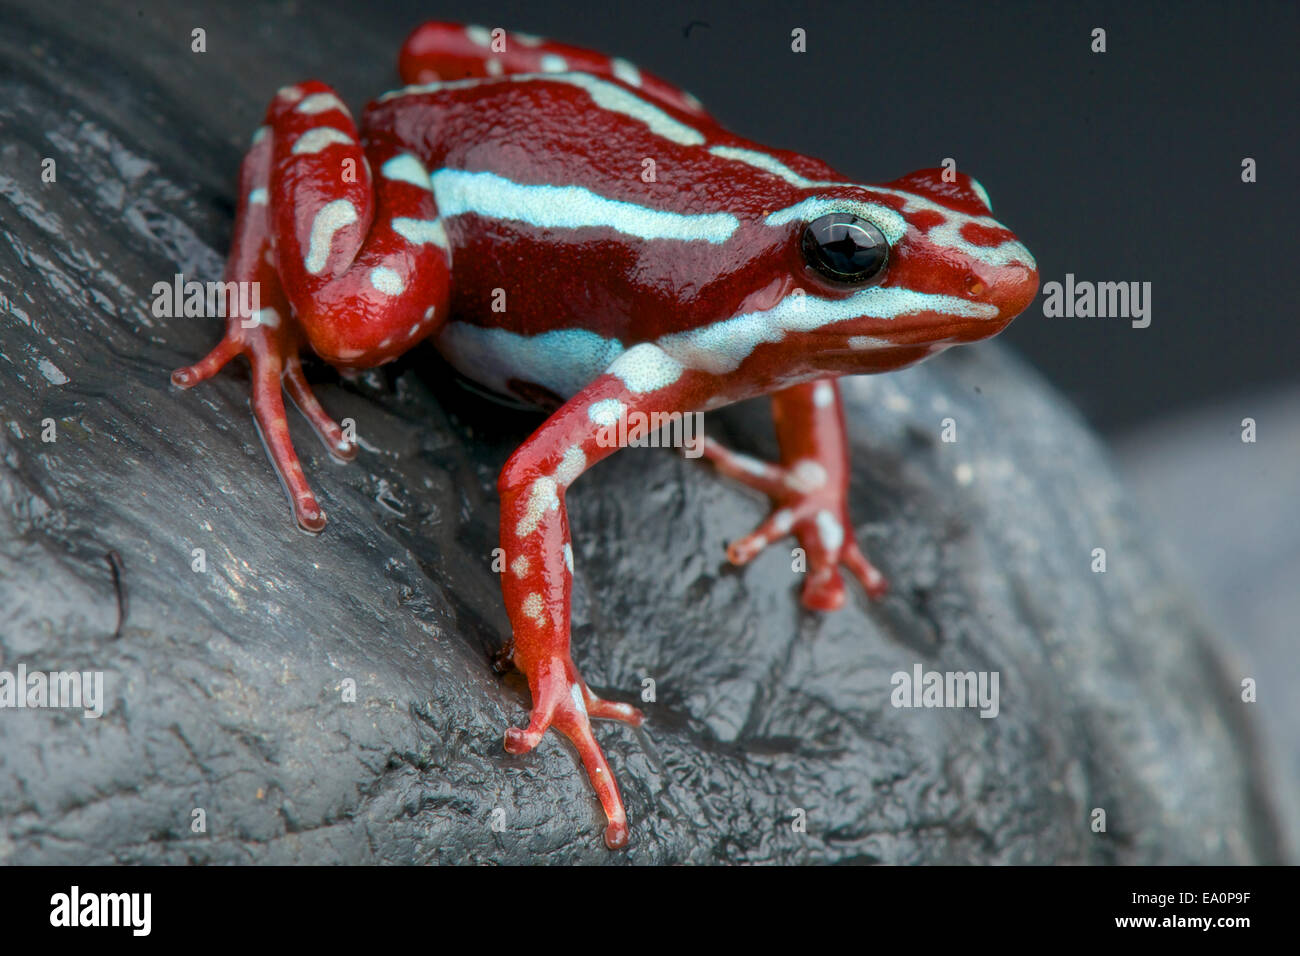 Striped dart frog / Epidobates anthonyi Stock Photo